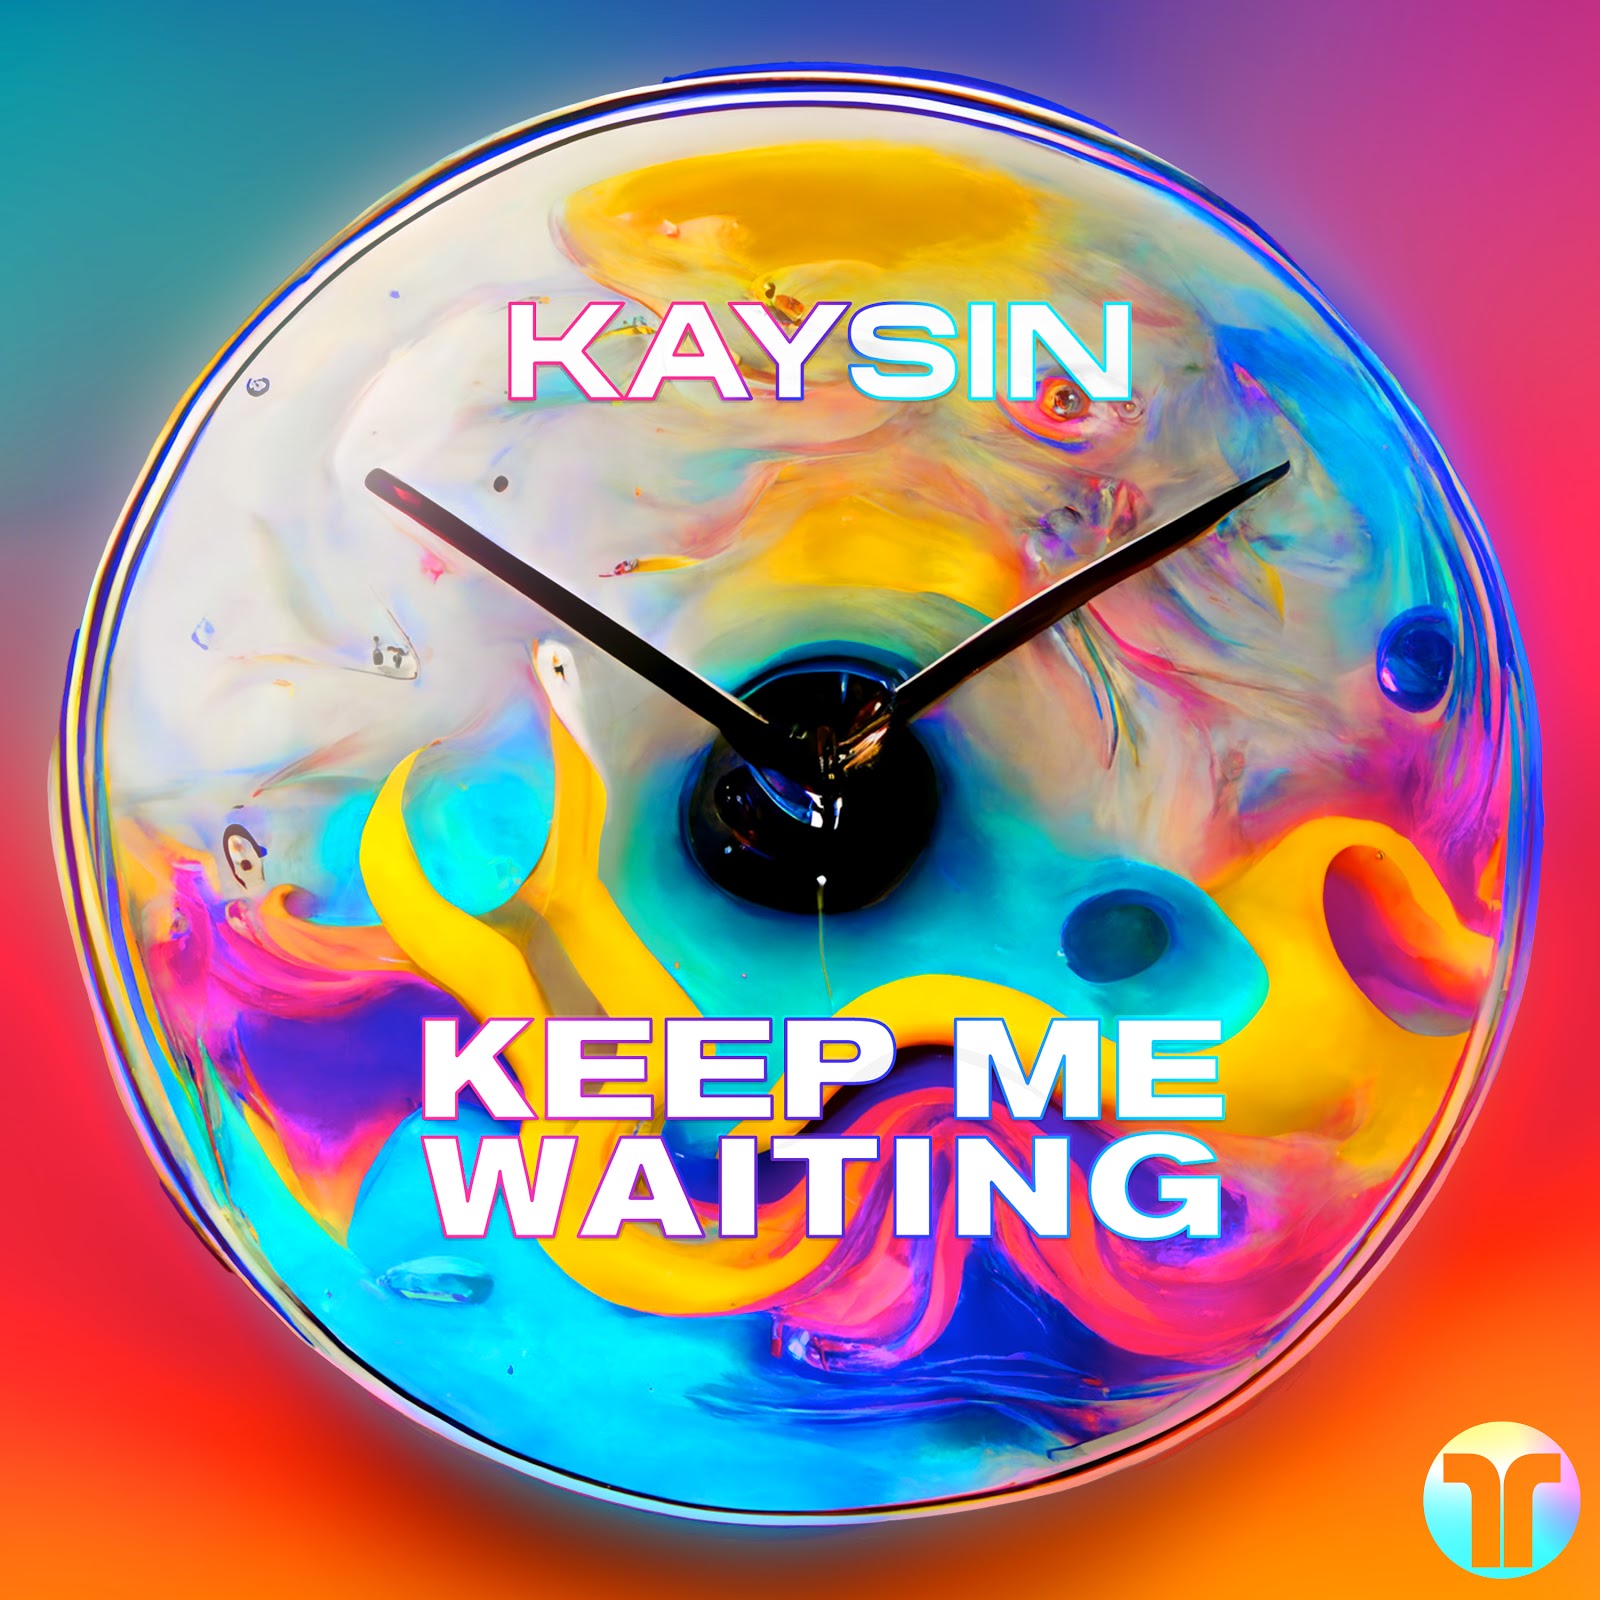 Kaysin Shares Groovy New Single “Keep Me Waiting”